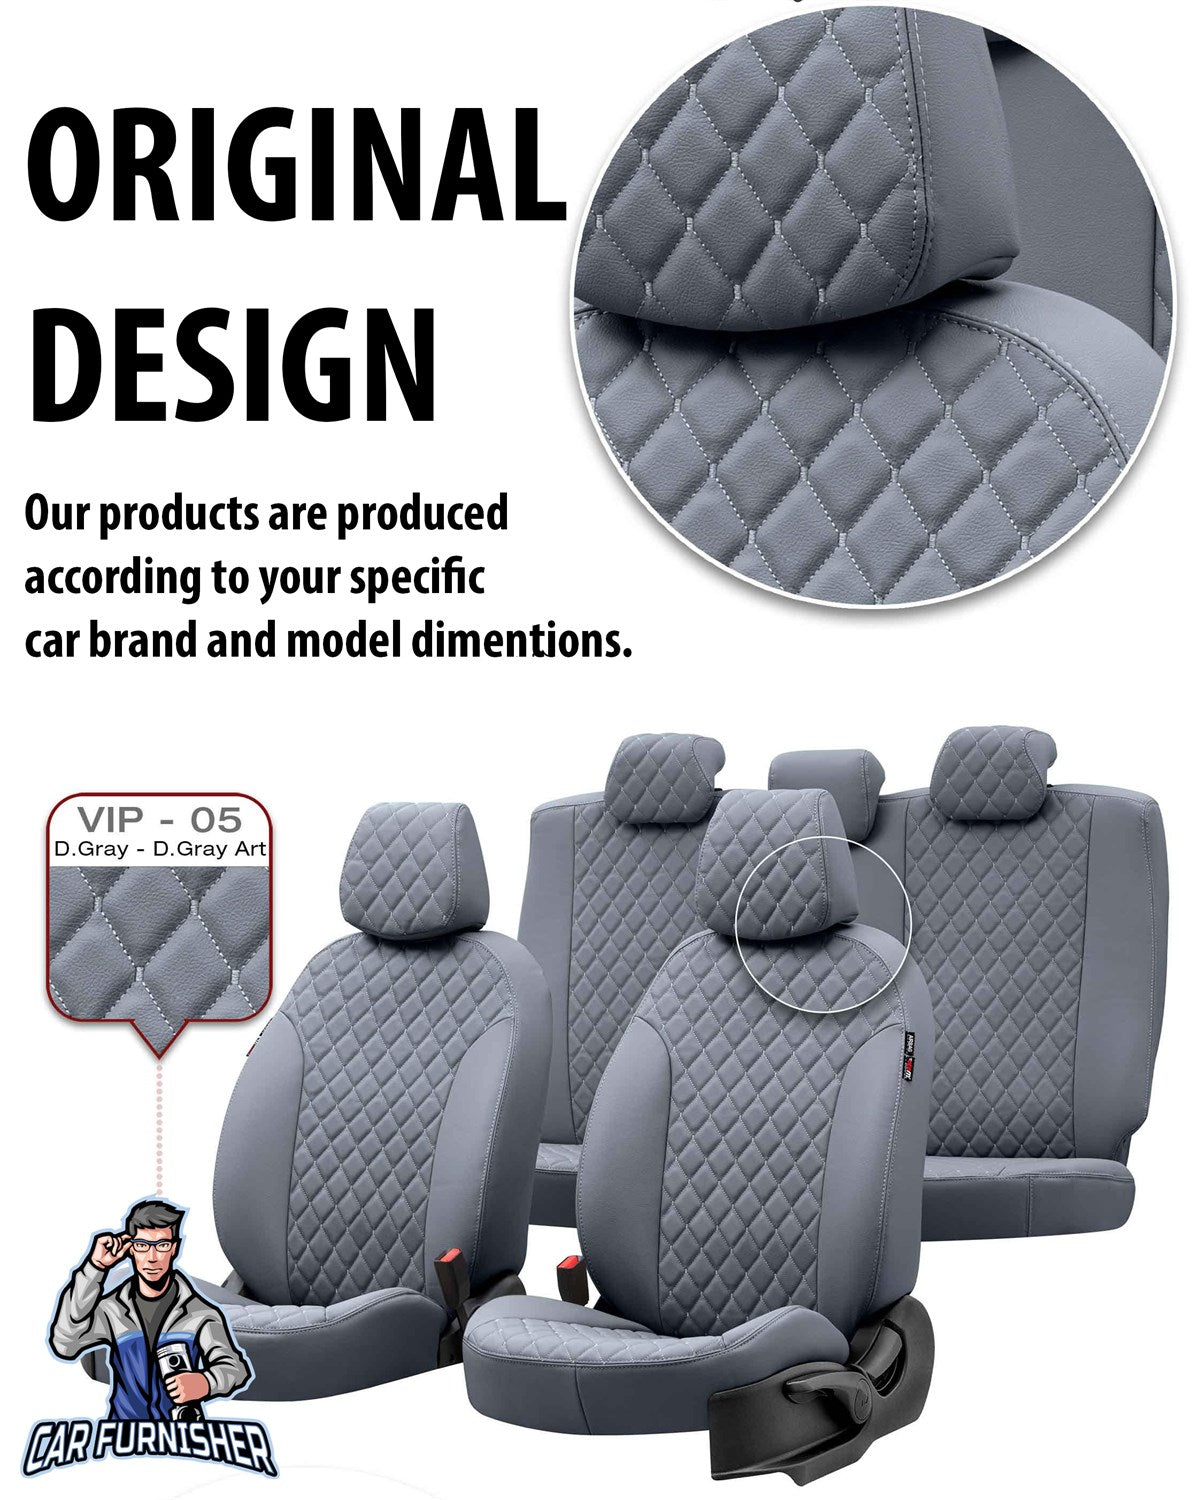 Isuzu N-Wide Seat Covers Madrid Leather Design Dark Gray Leather